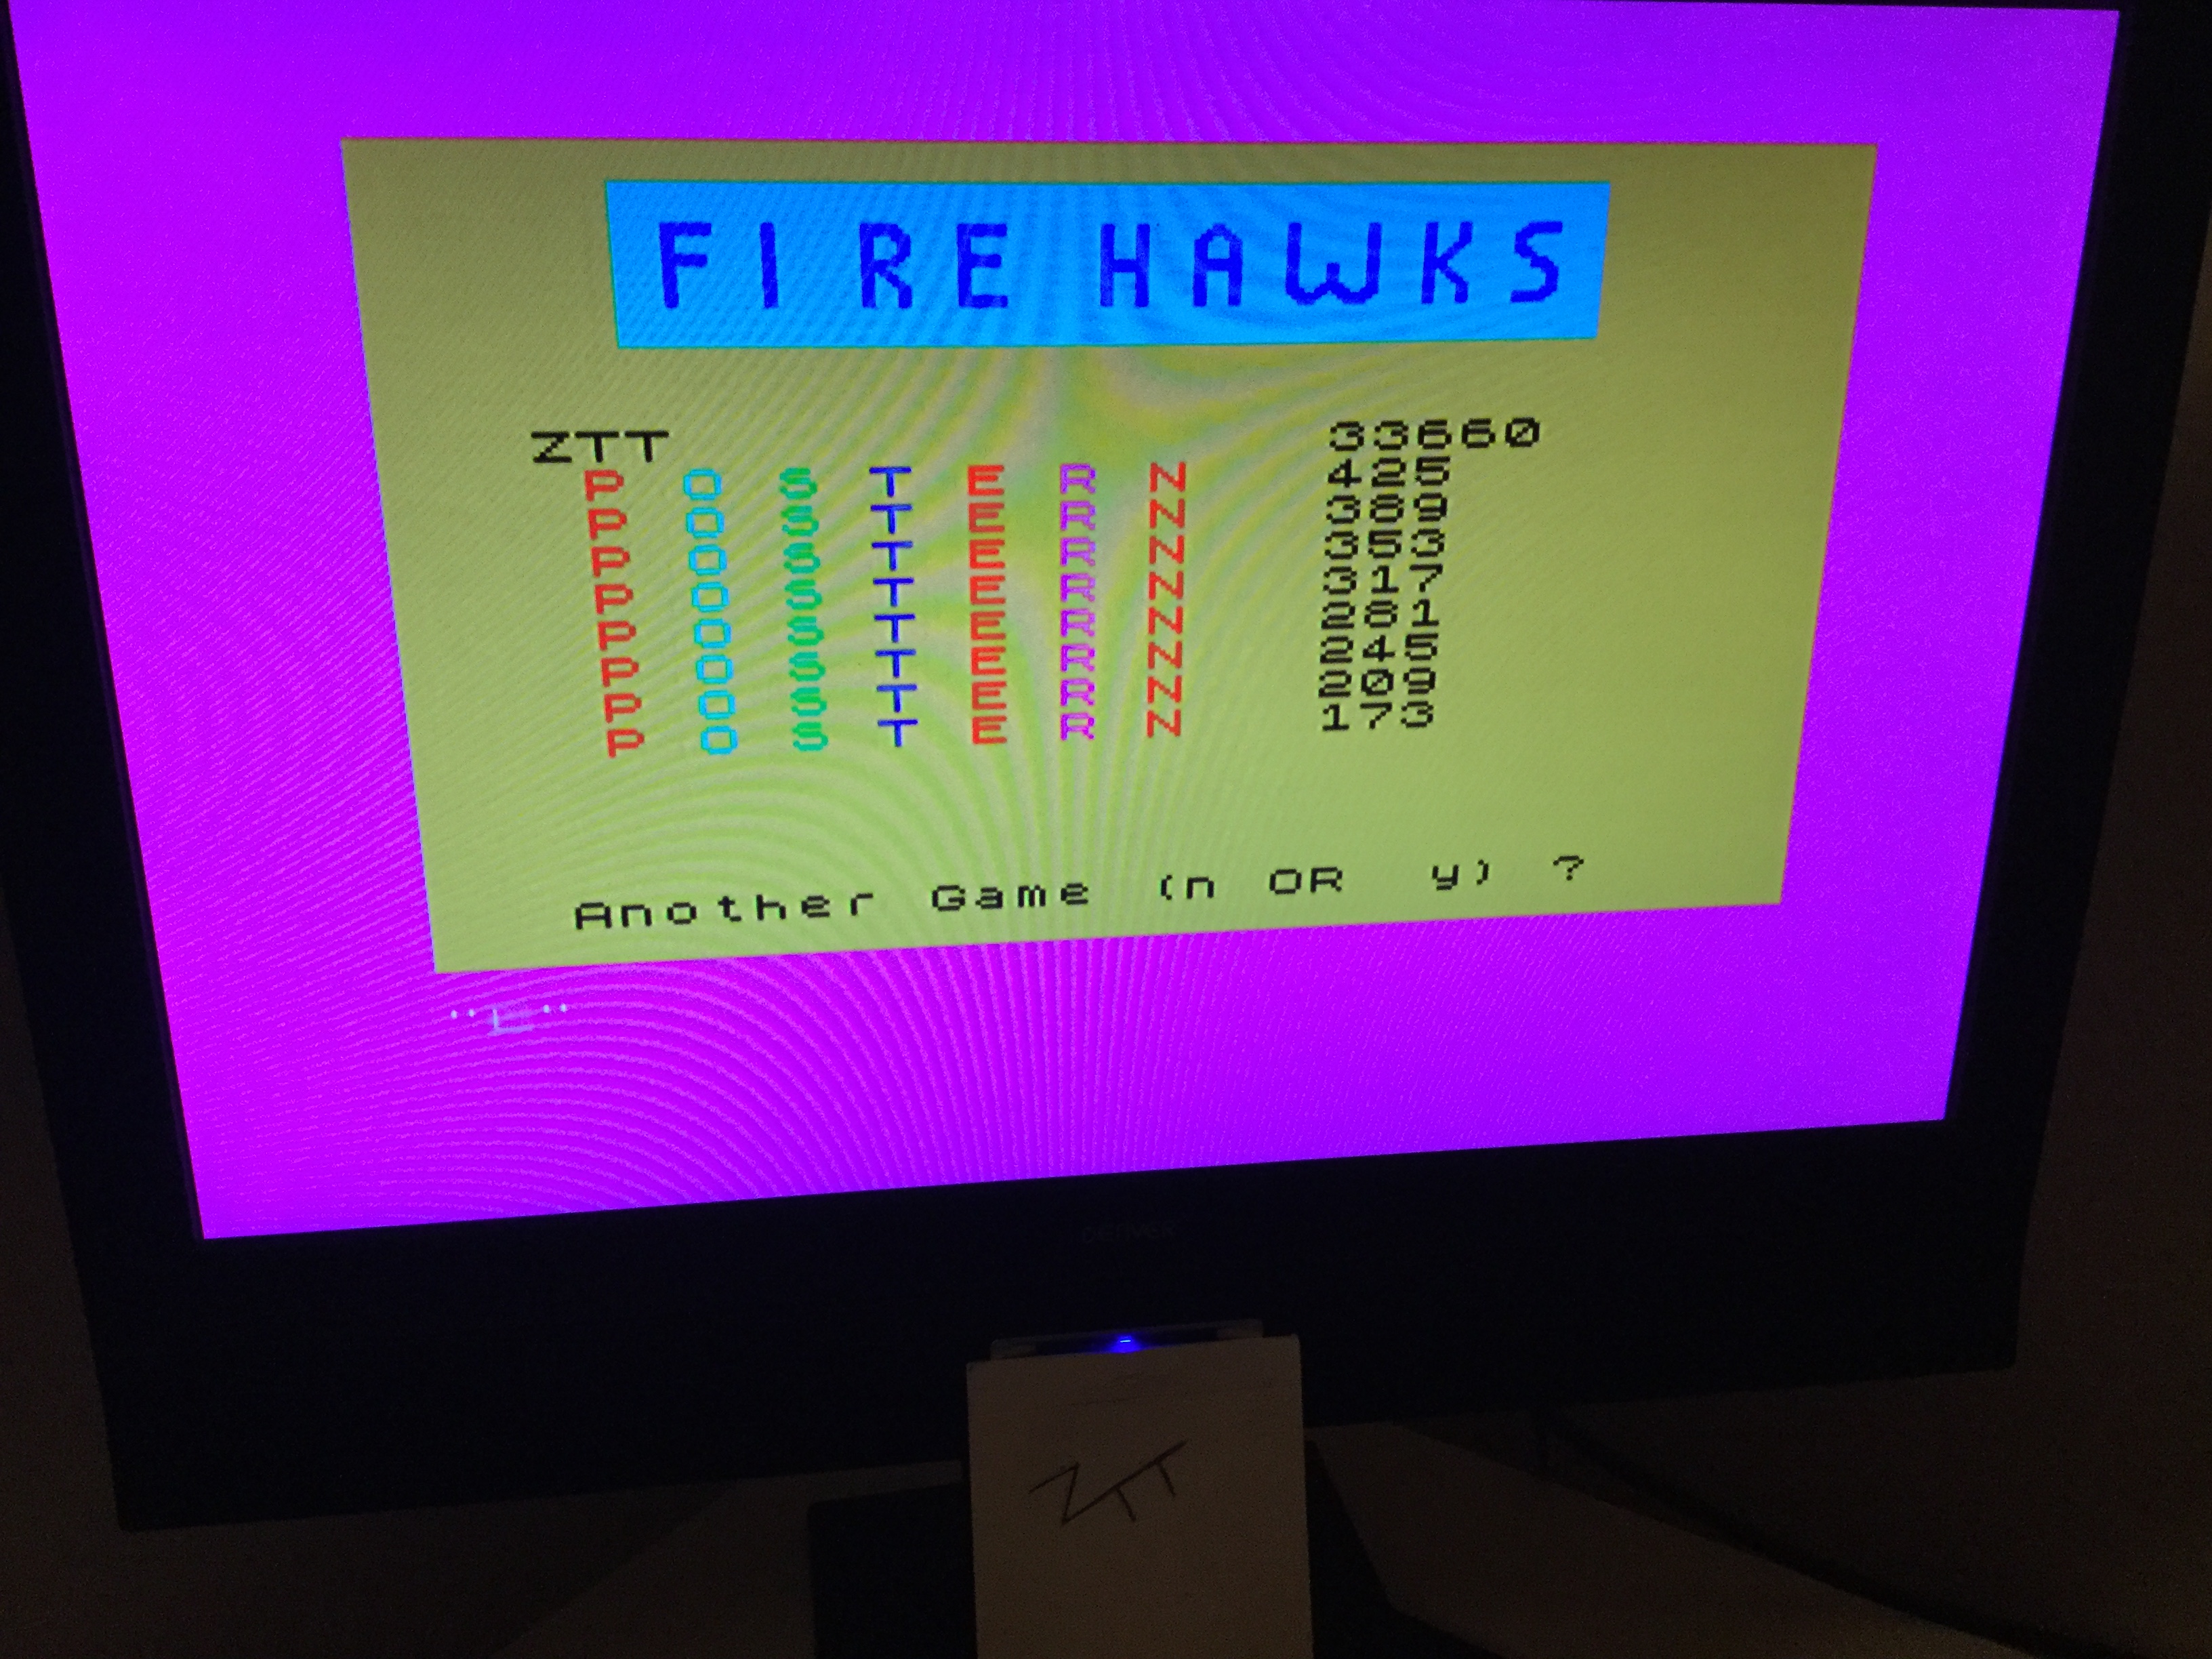 Frankie: Fire Hawks [Starting Wave 1 / Speed 15] (ZX Spectrum) 33,660 points on 2019-11-02 02:33:57